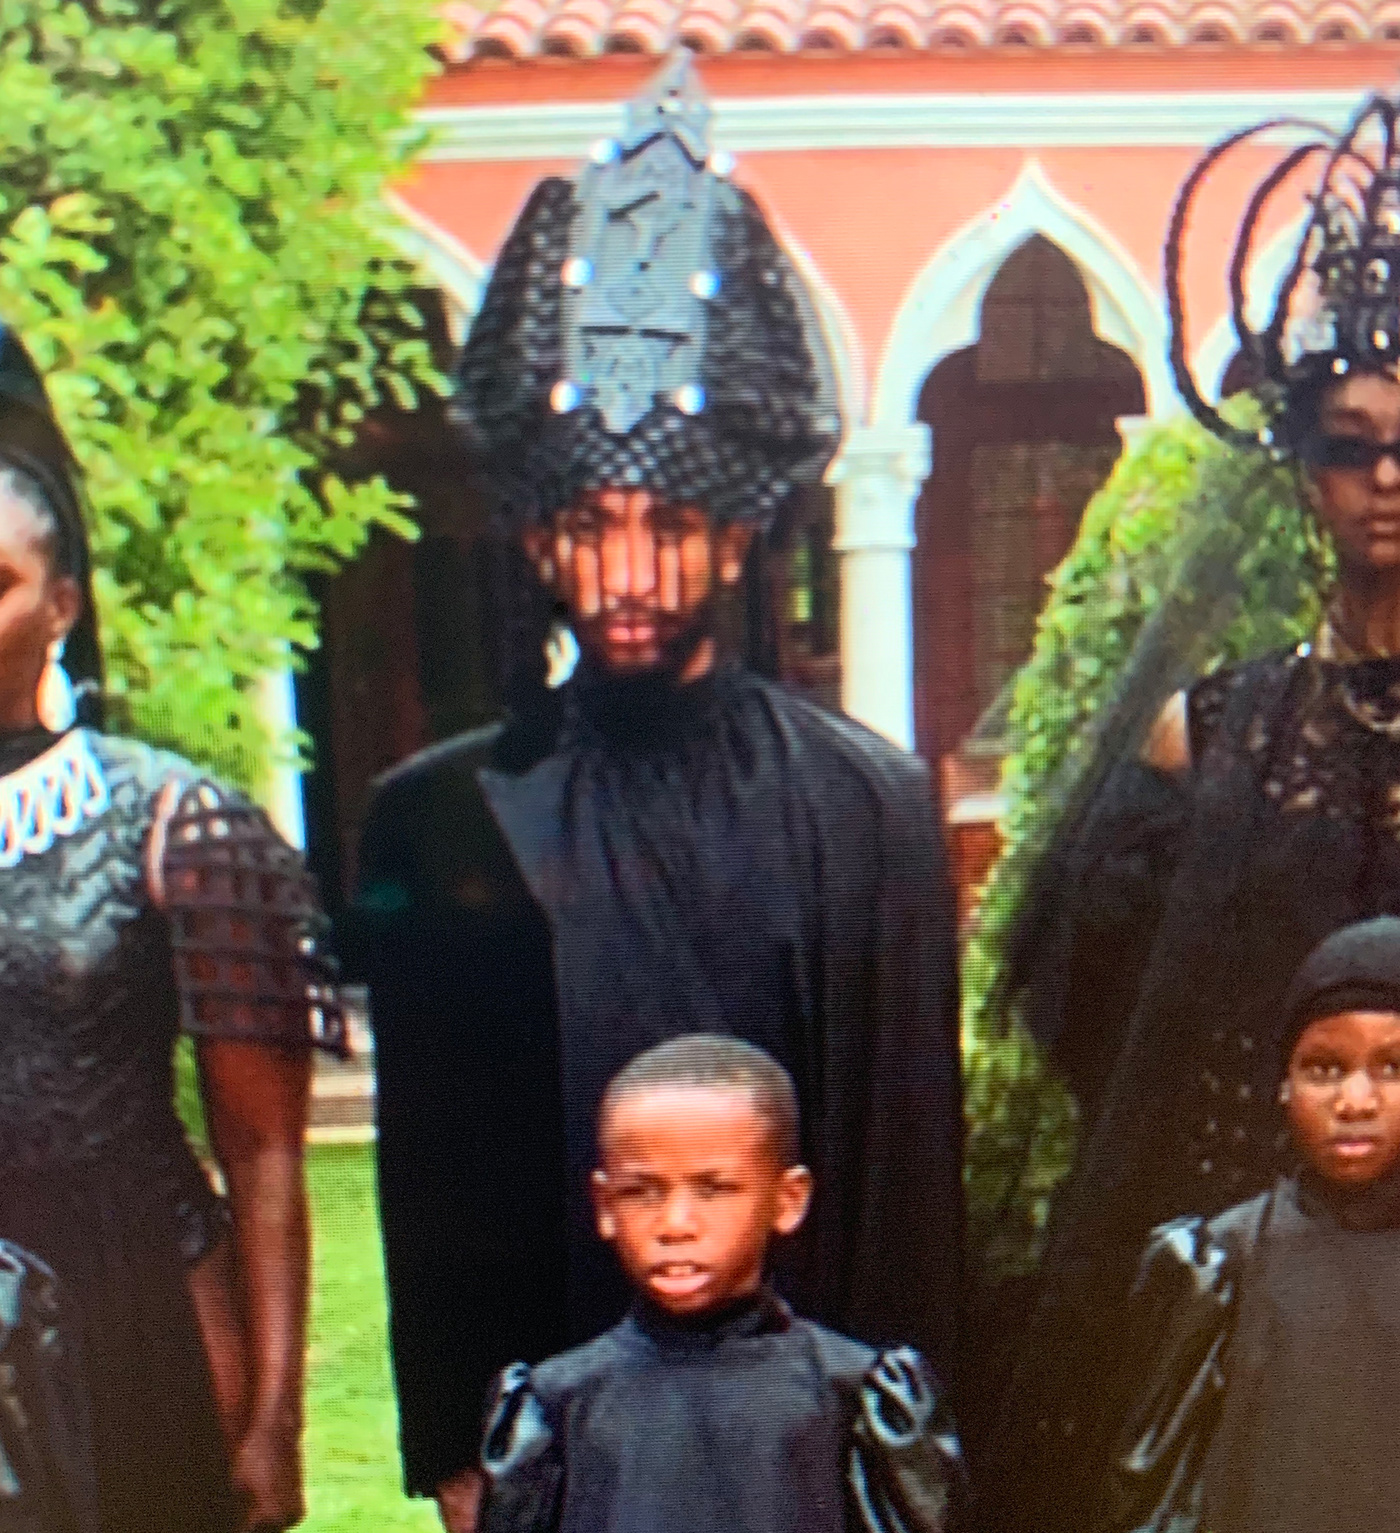 africa Beyonce Black is King Costume Design  costumes disney disney+ Melissa Simon-Hartman mood 4 eva The Lion King